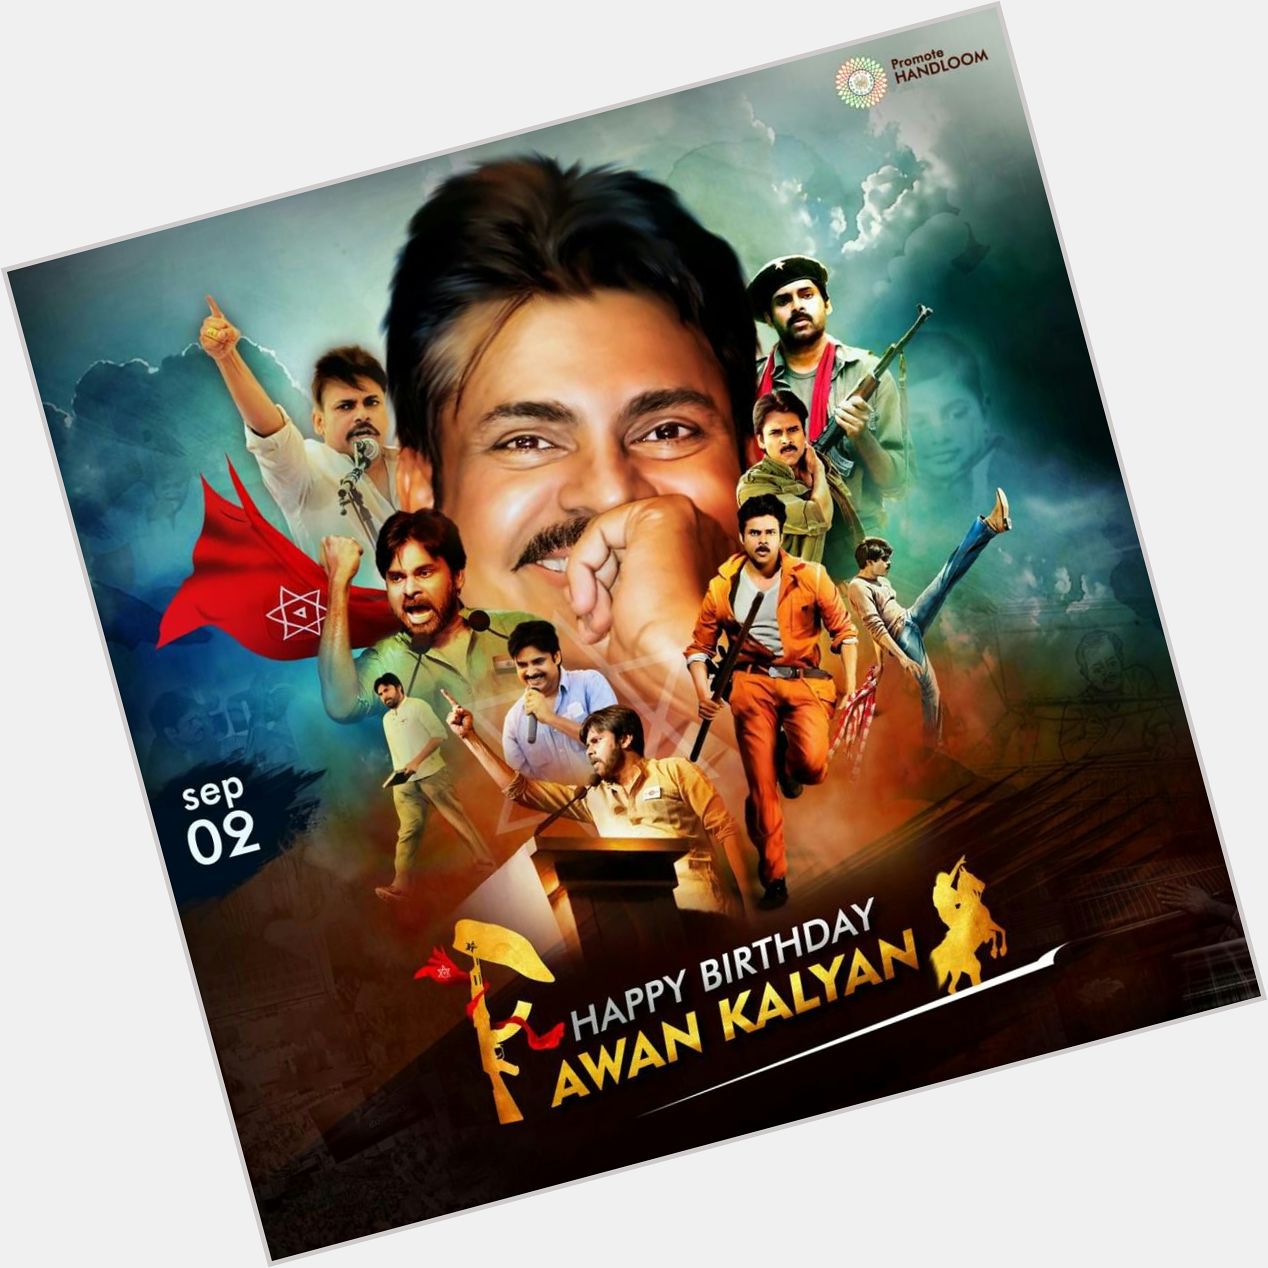 Advance happy birthday to 
My hero power star pawan Kalyan 